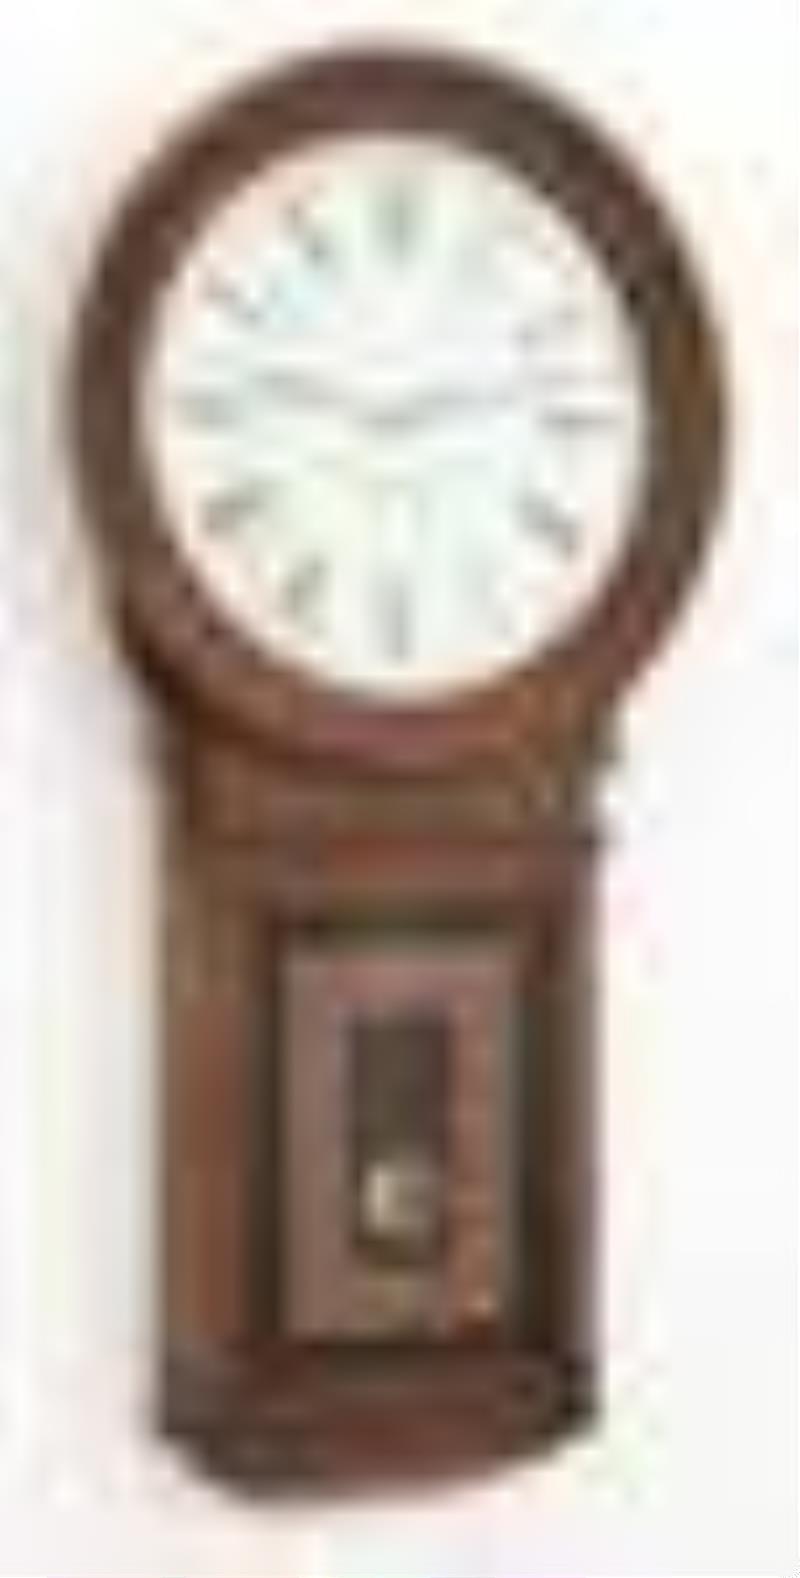 E. Howard & Co. "No. 70-16 Regulator" Wall Clock